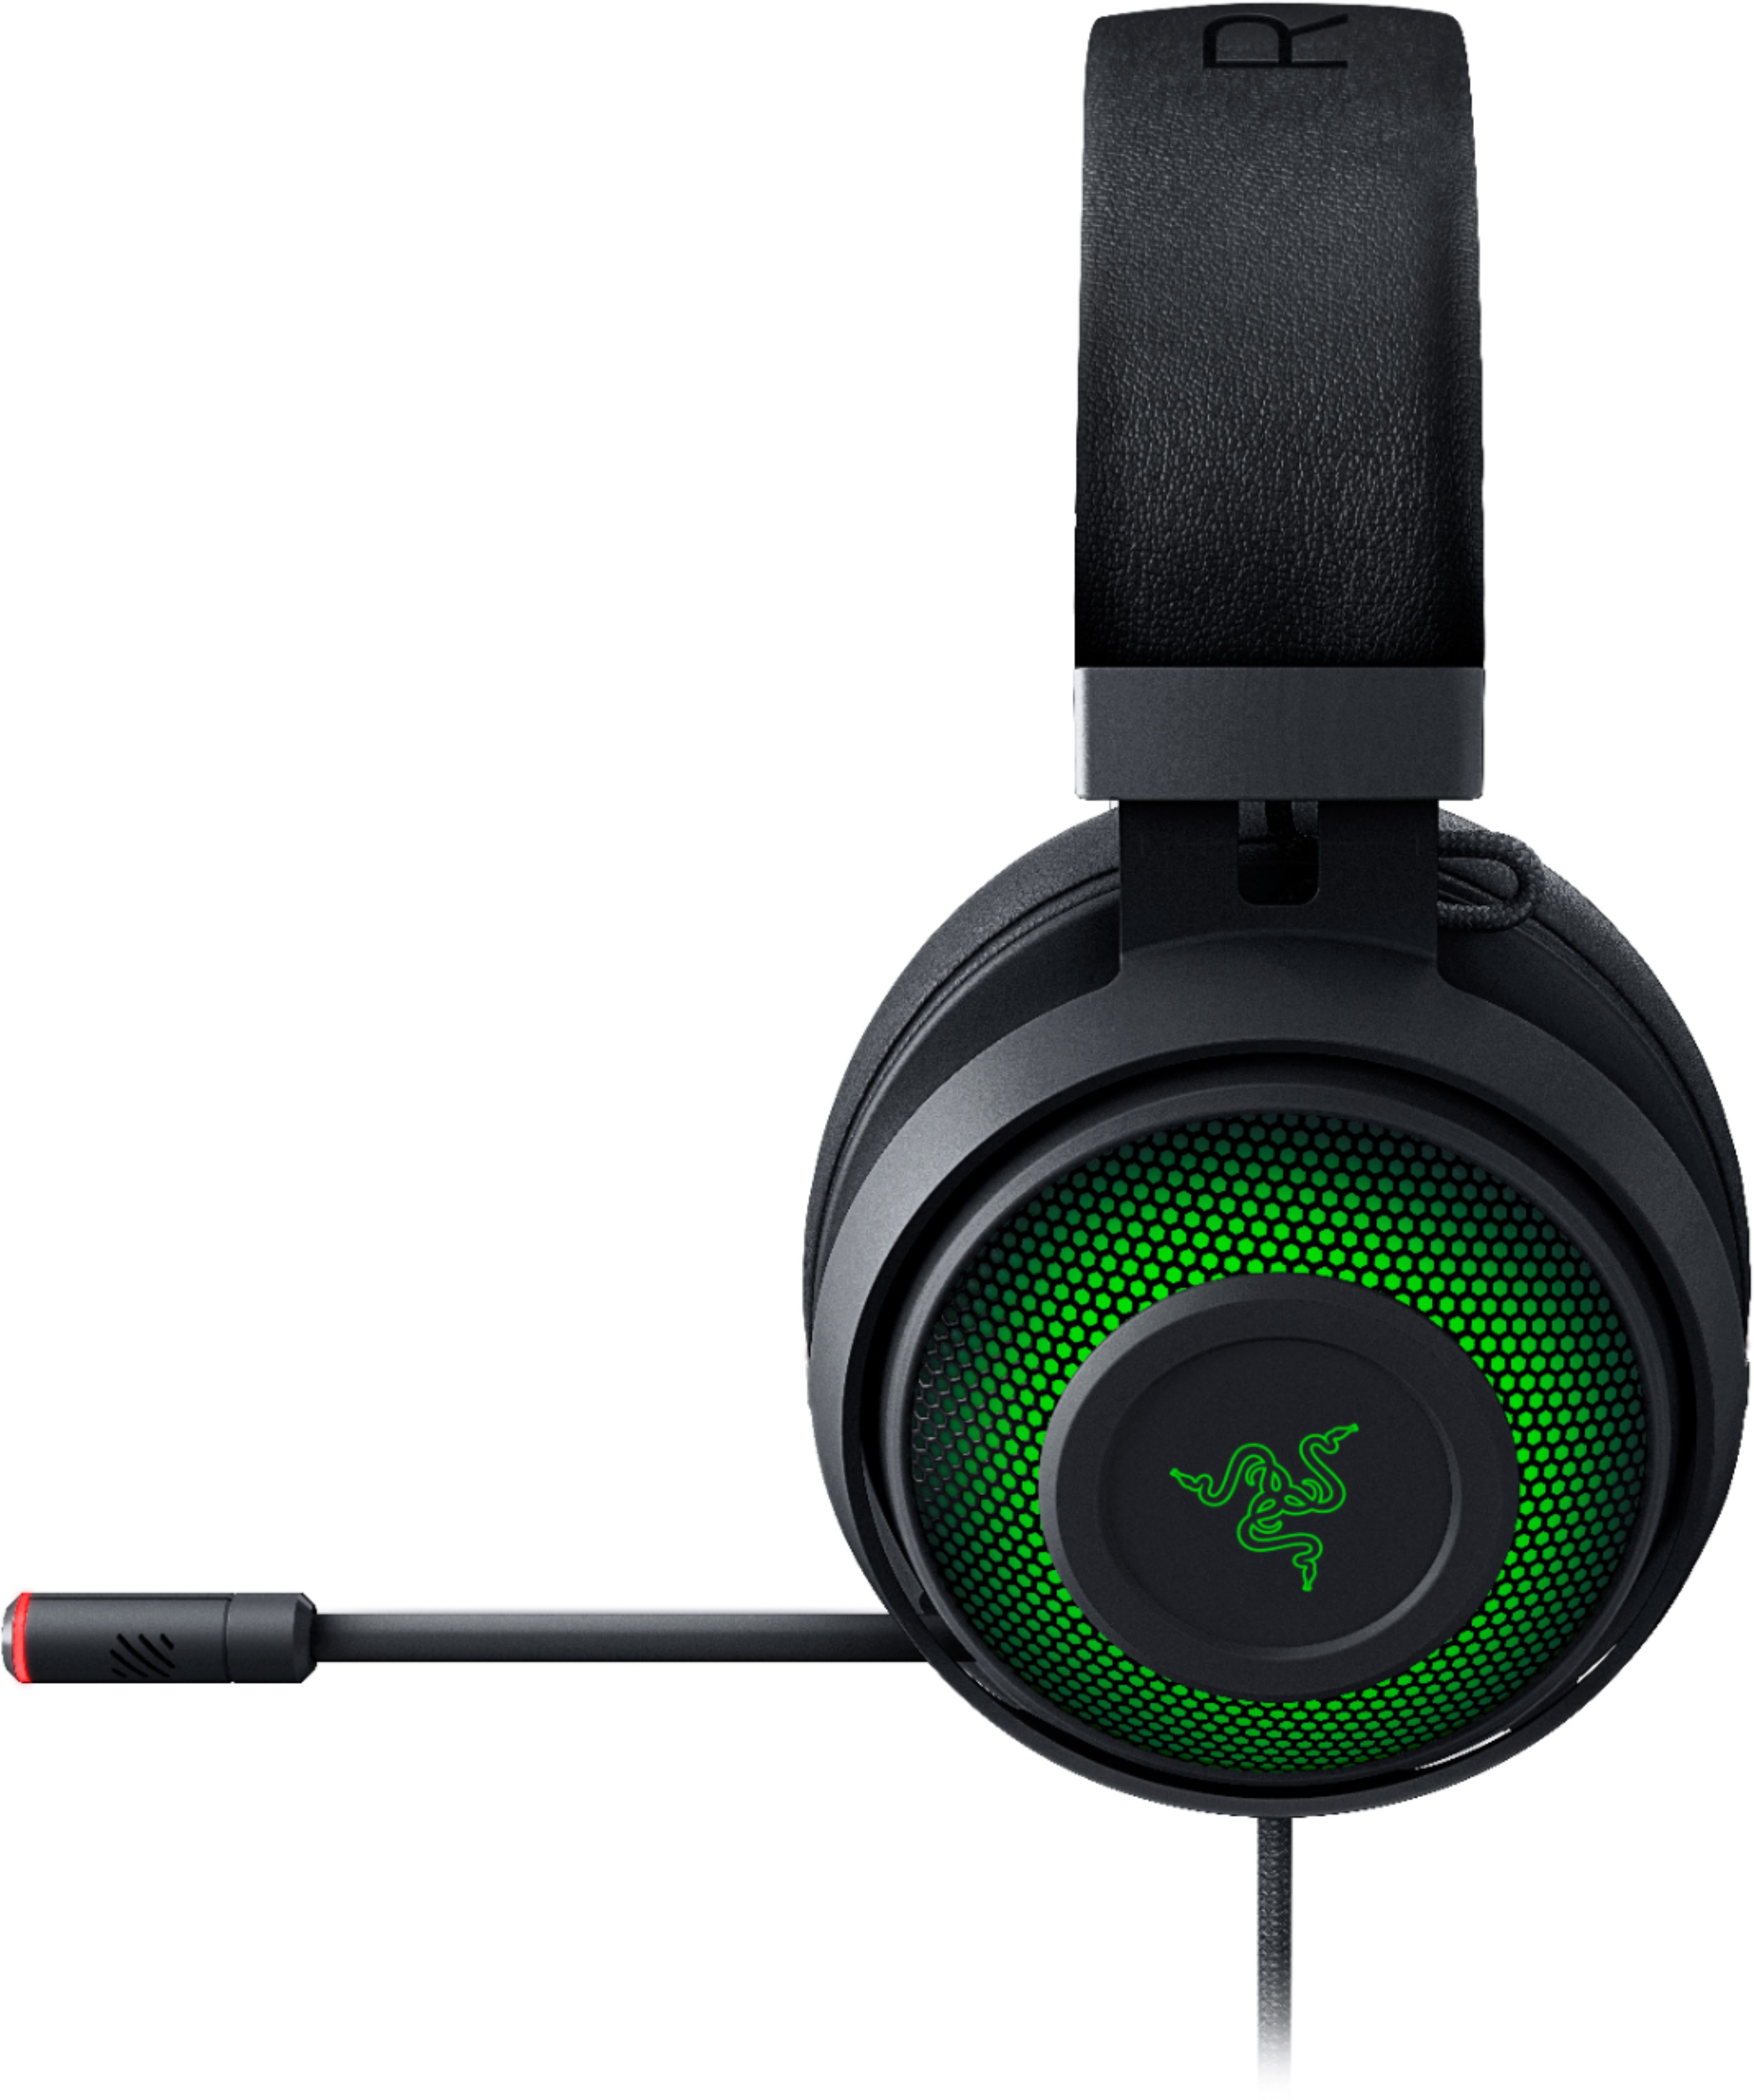 Razer Kraken Ultimate Wired Gaming Headset for PC Classic Black